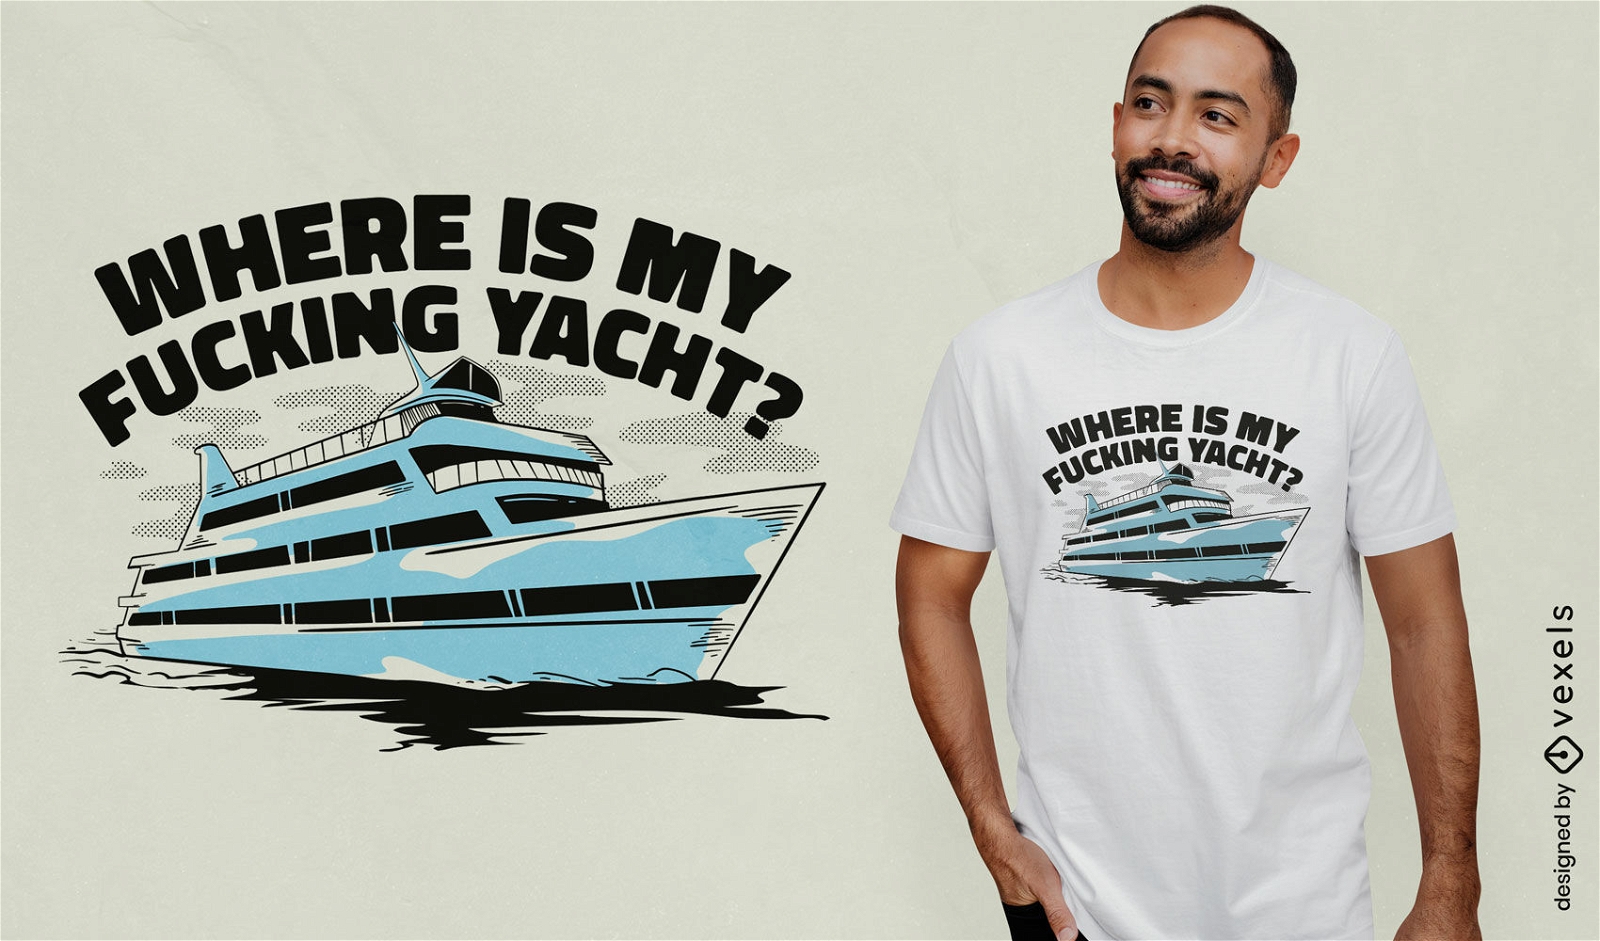 Where is my yacht t-shirt design